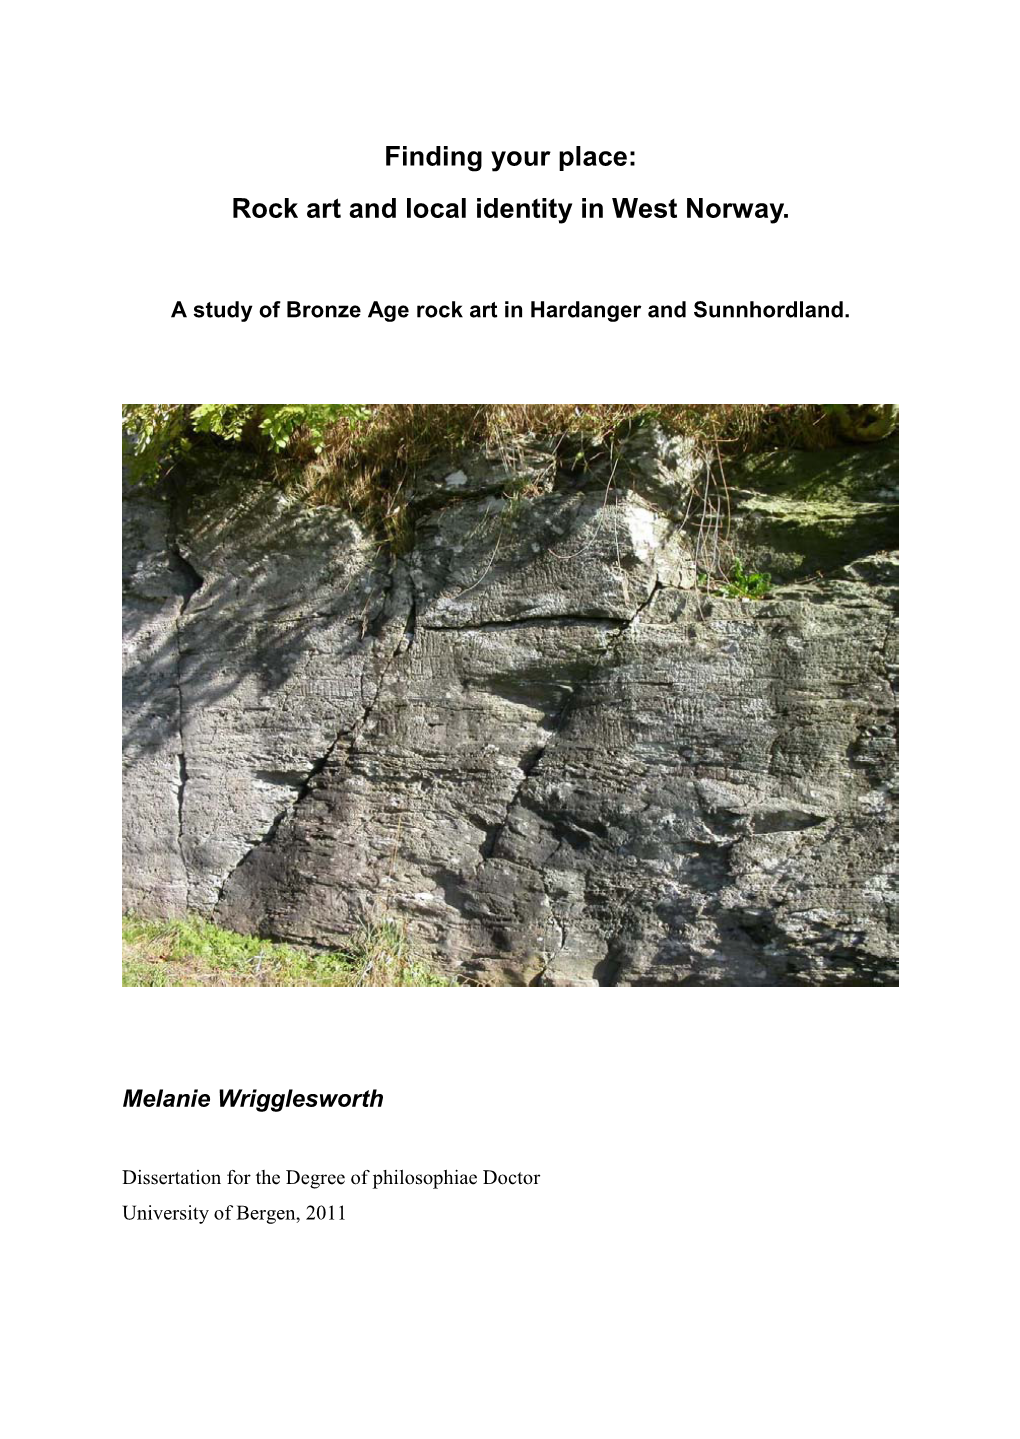 A Study of Bronze Age Rock Art in Hardanger and Sunnhordland